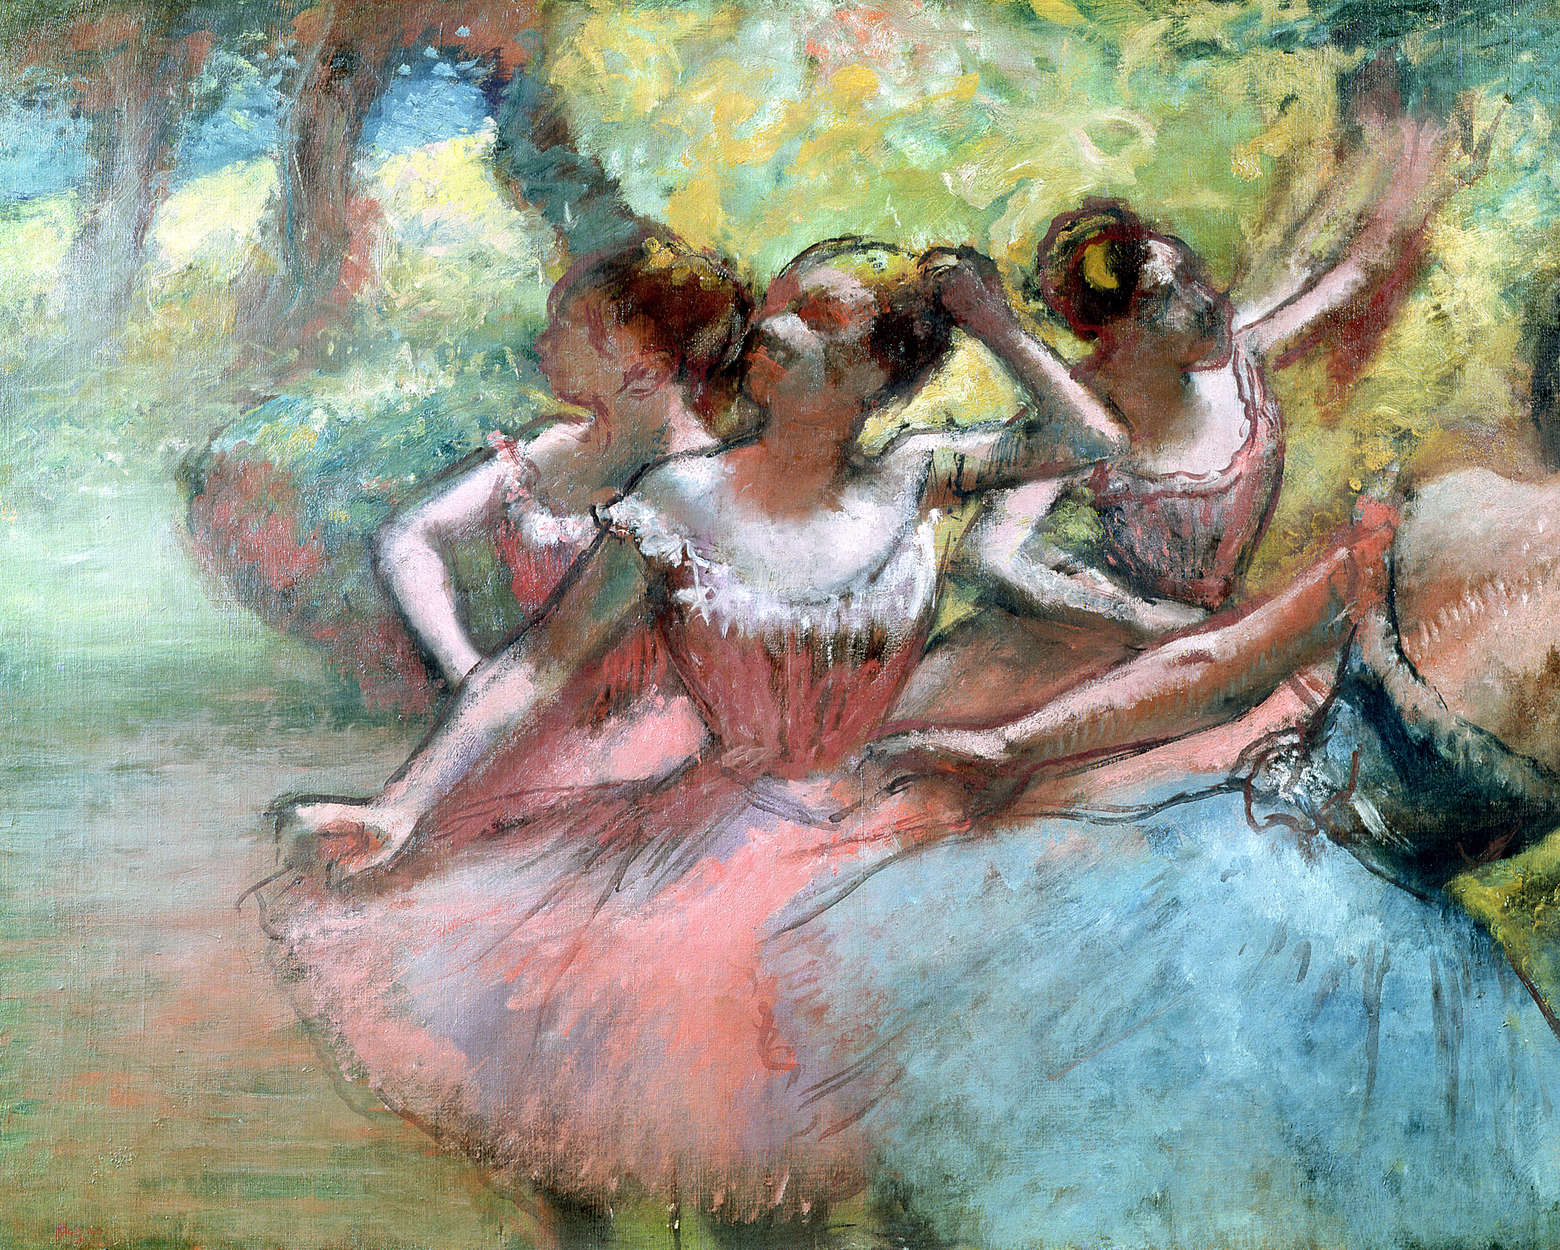             Mural "Cuatro bailarinas en escena" de Hilaire Degas
        